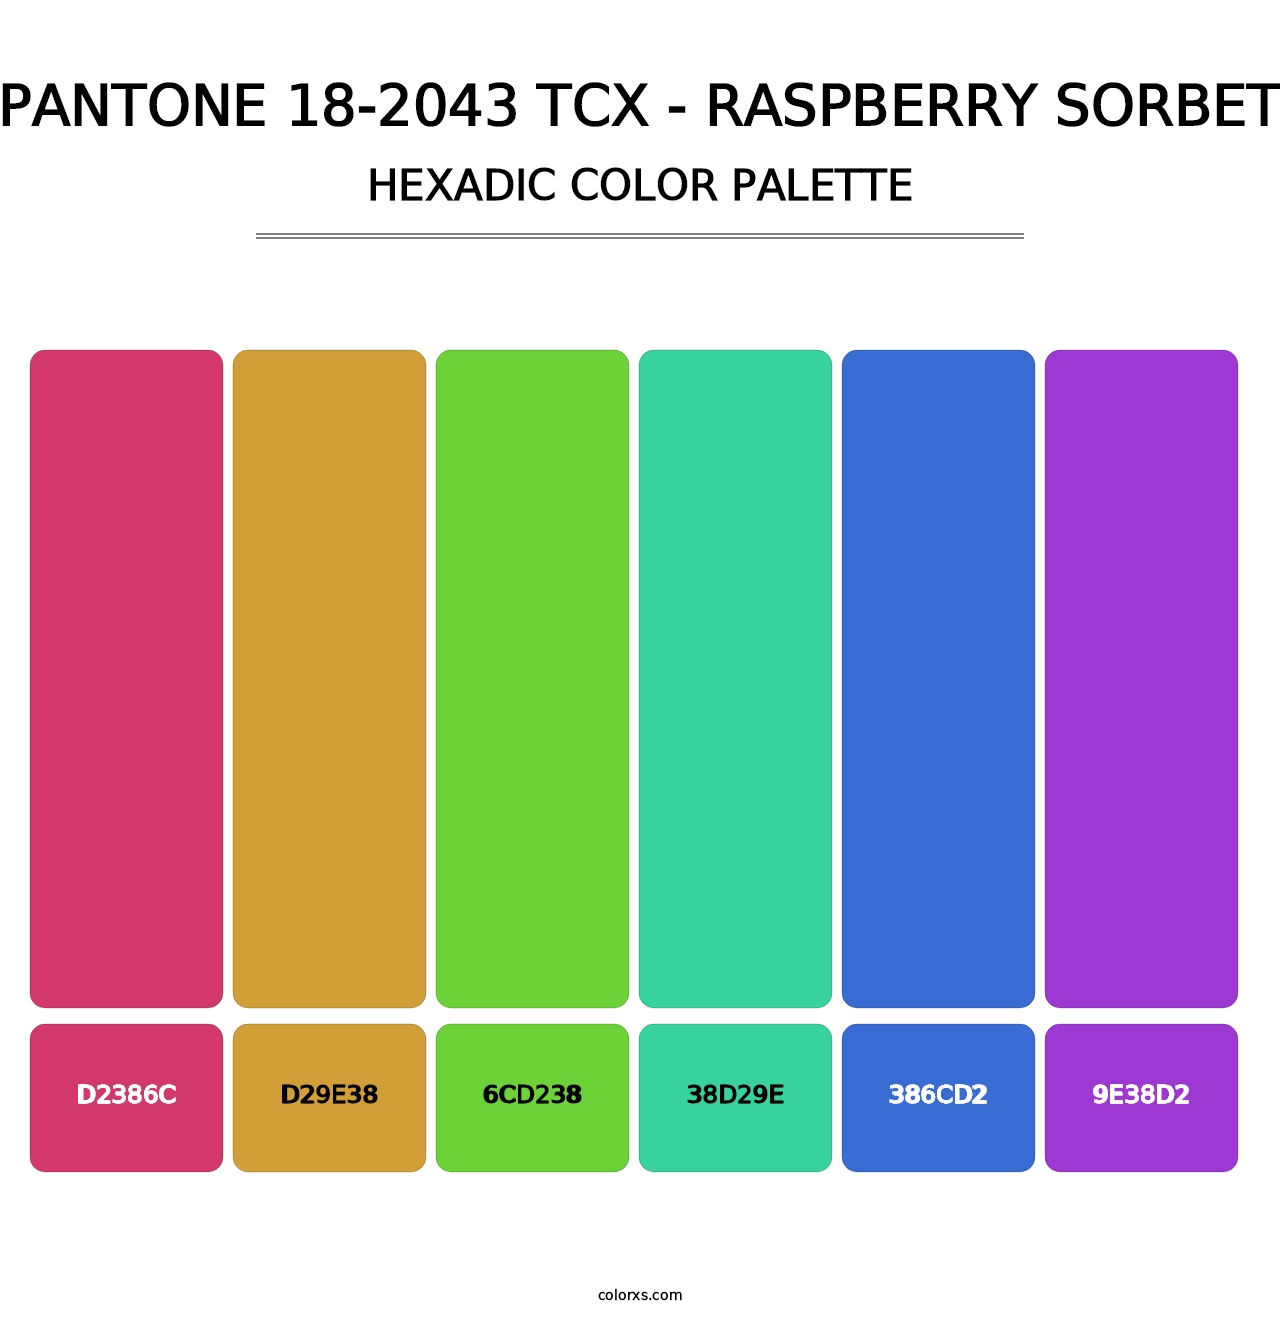 PANTONE 18-2043 TCX - Raspberry Sorbet - Hexadic Color Palette